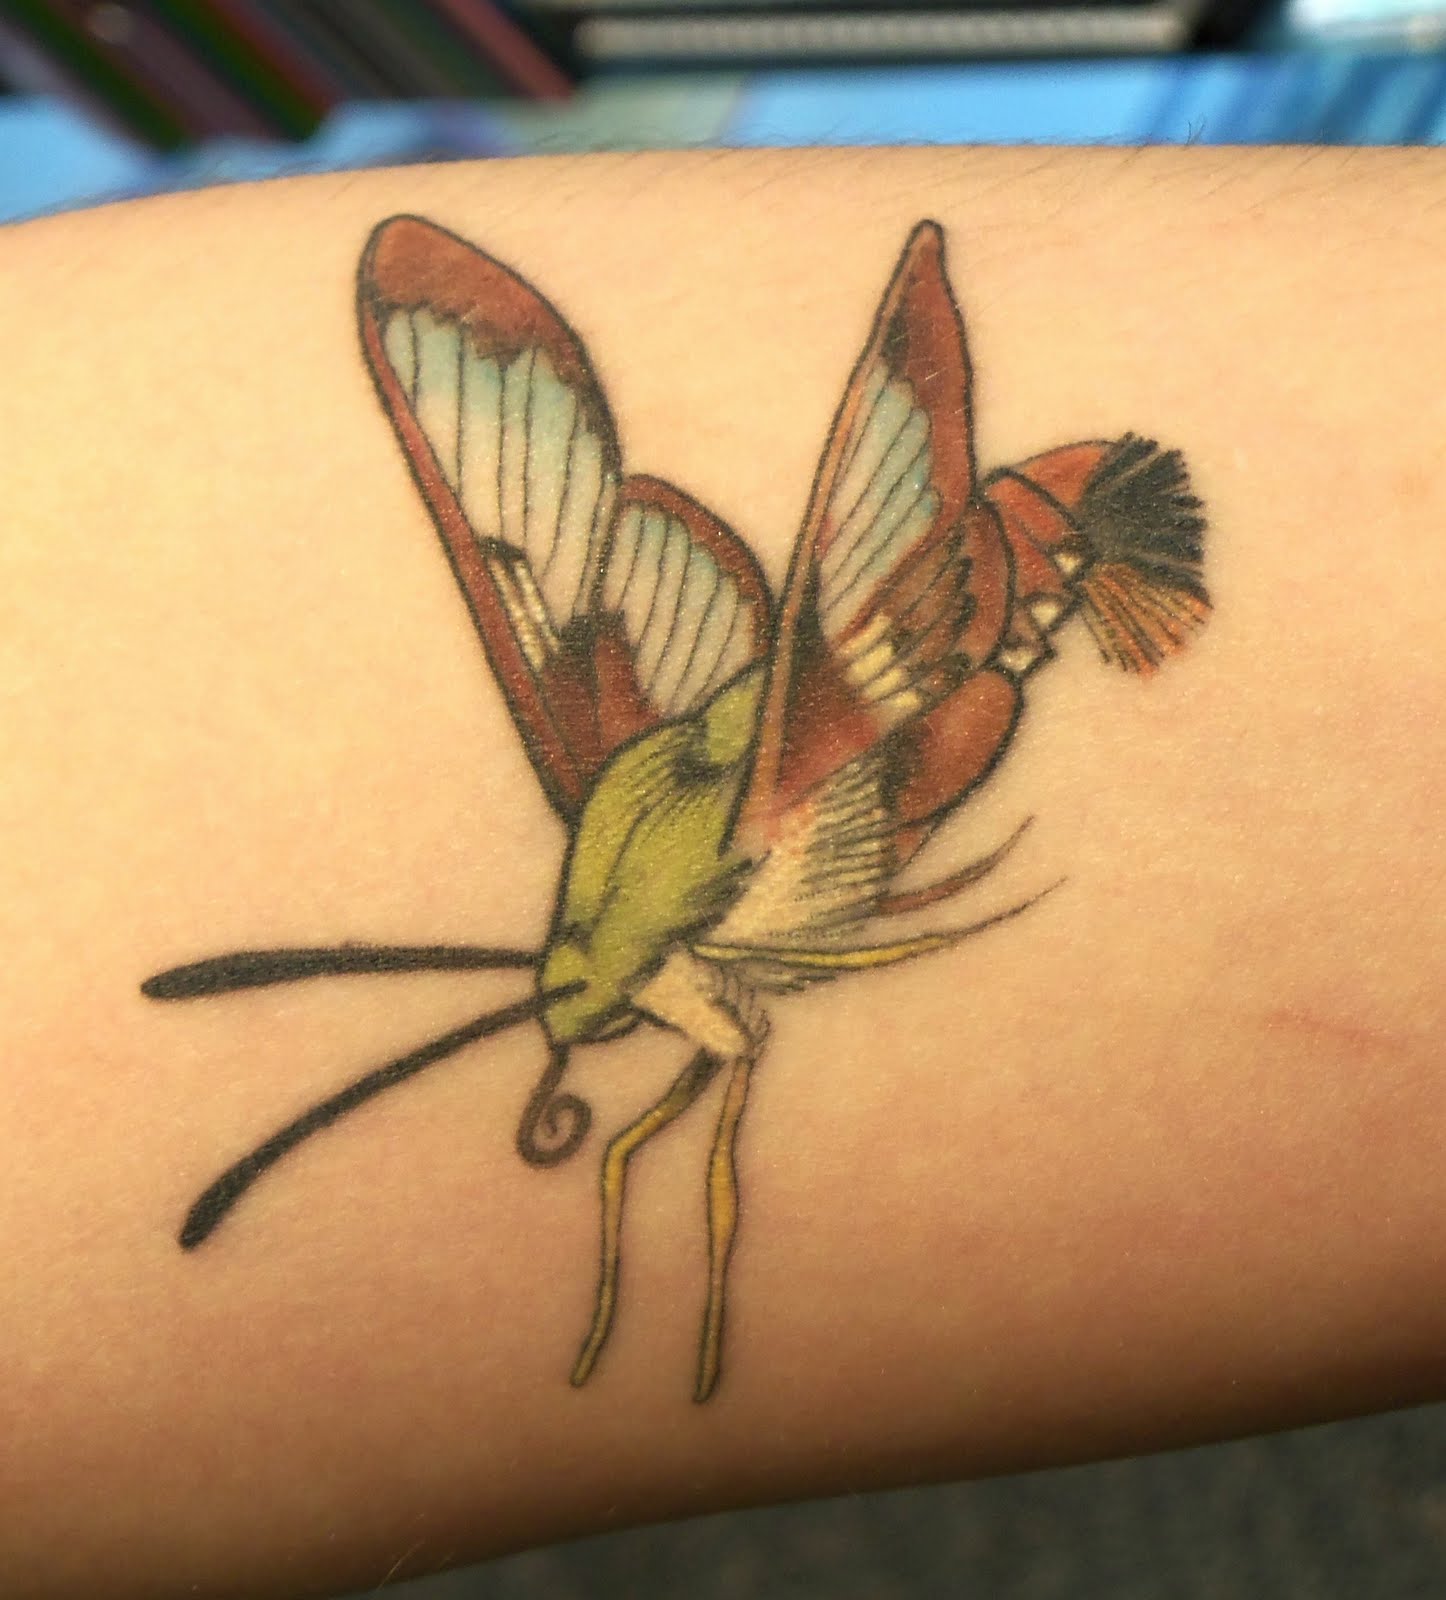 see as many moth tattoos